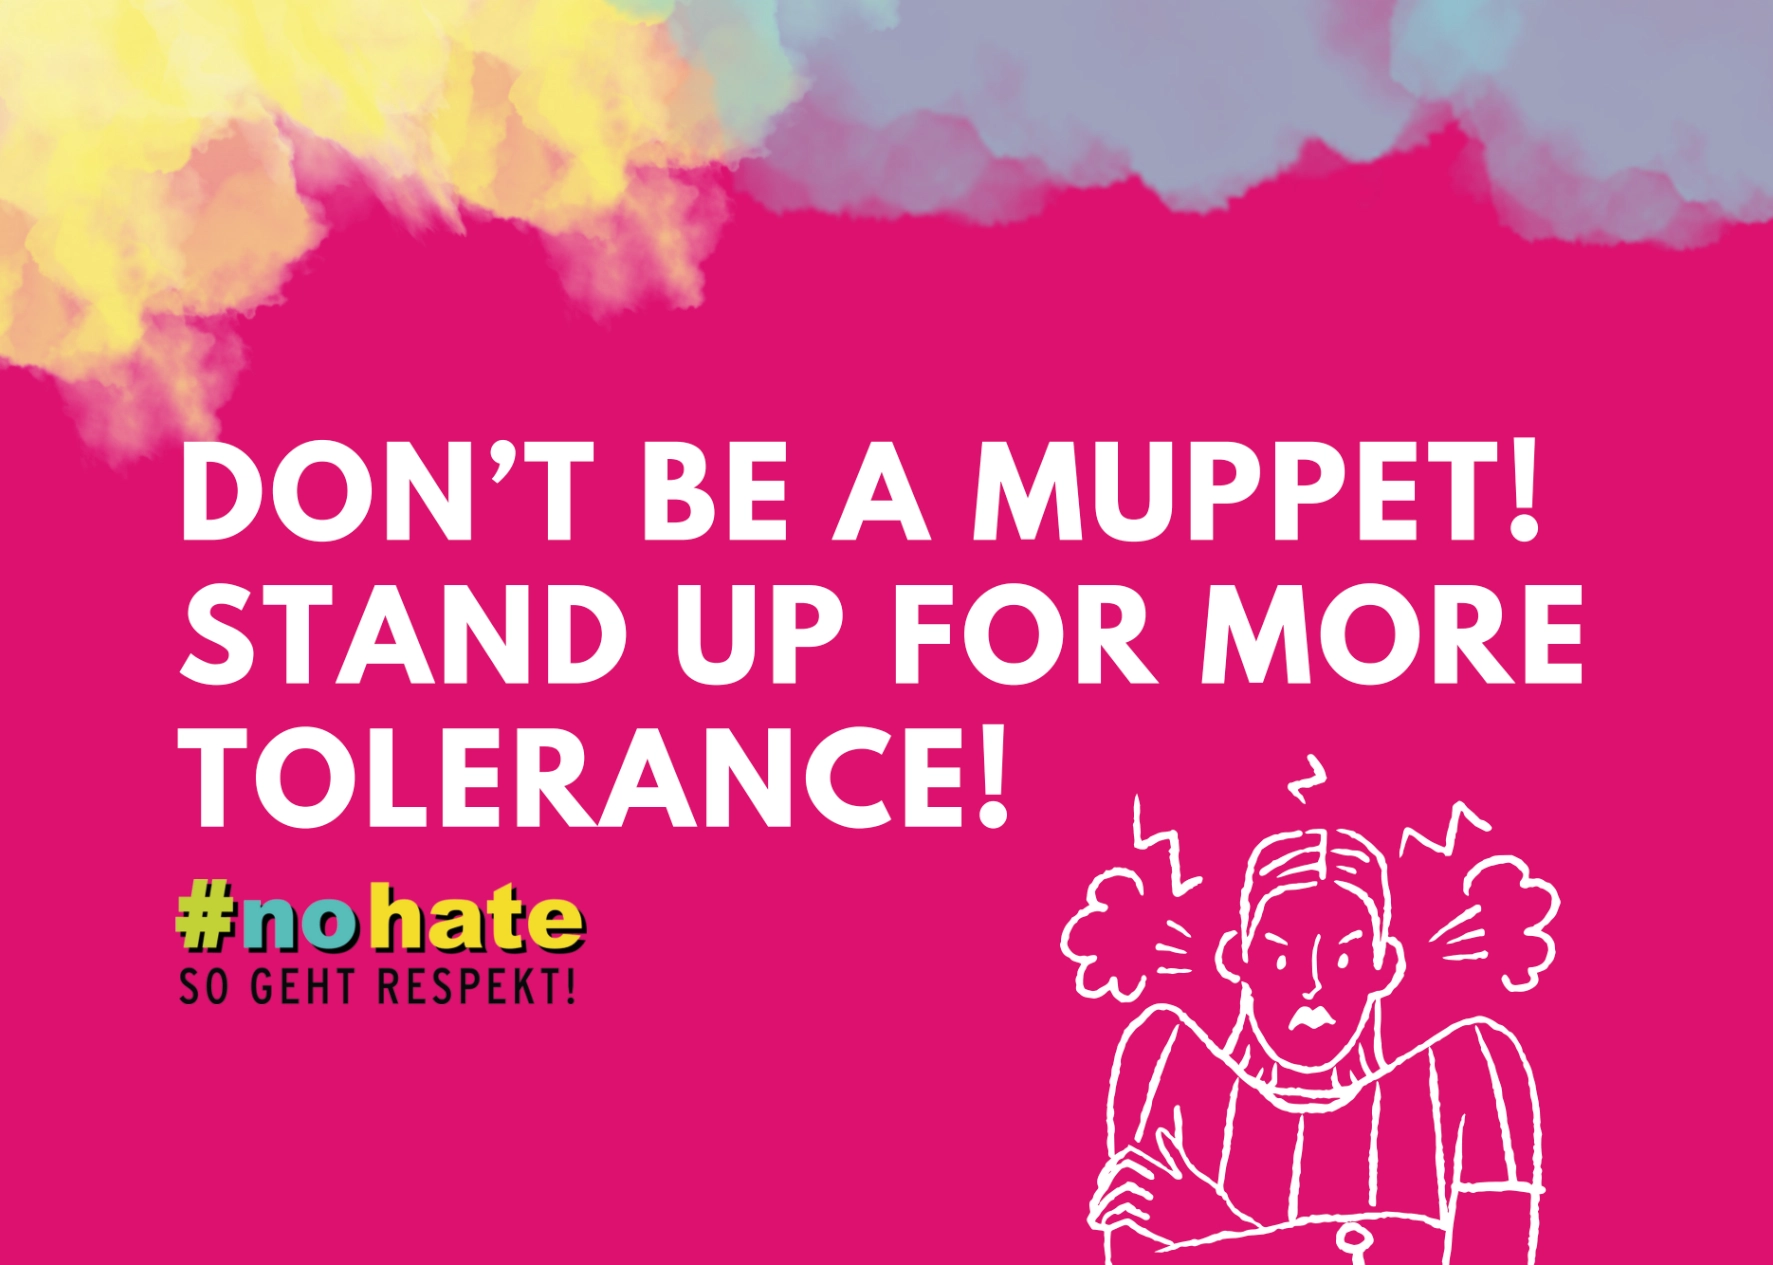 Postkarten- und Stickermotiv "Don't be a muppet! Stand up for more tolerance!"